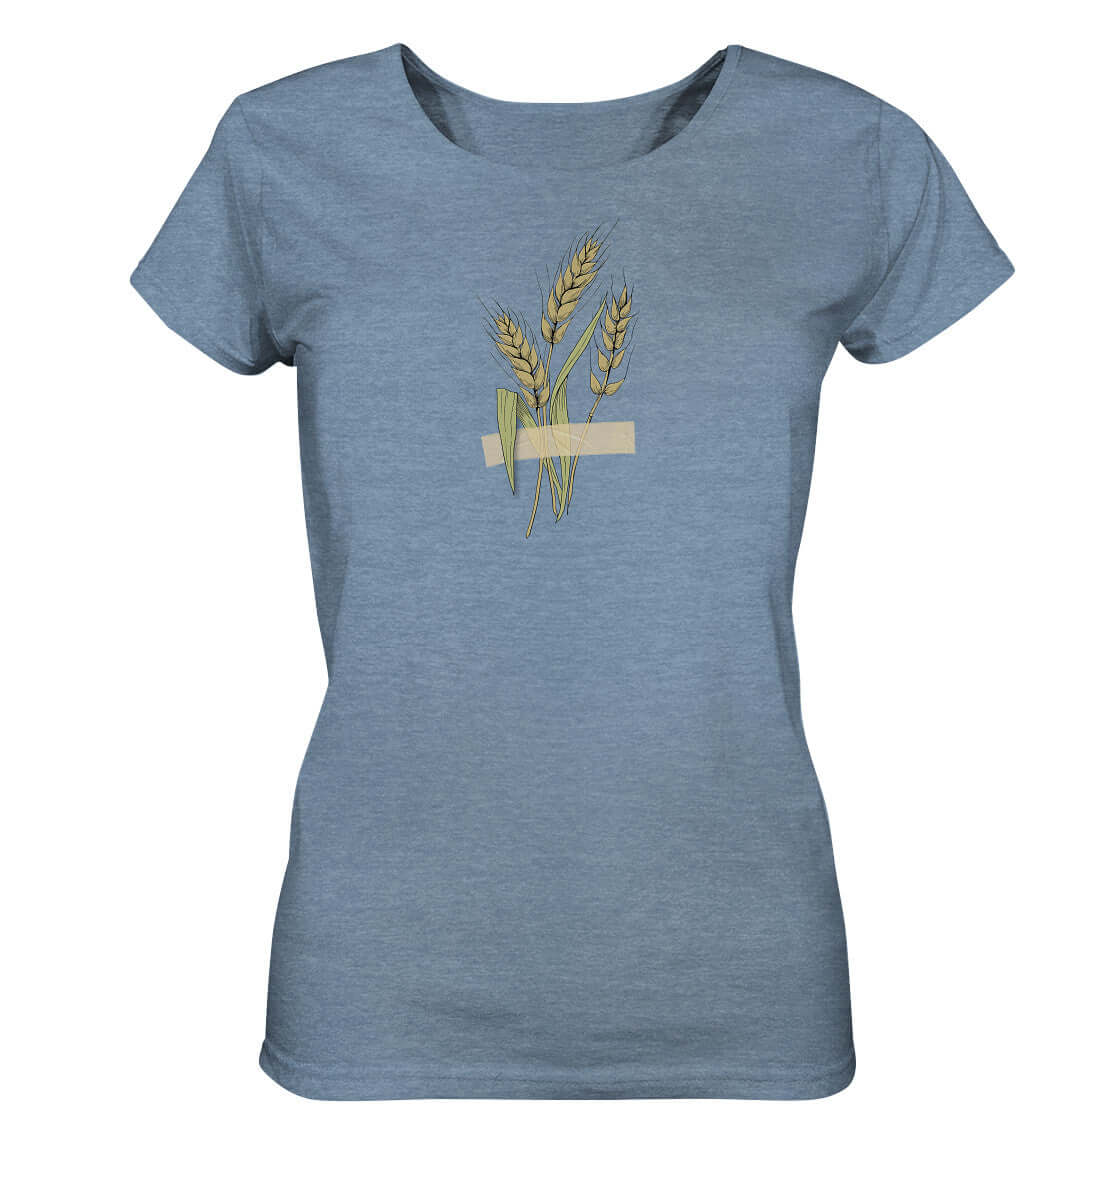 Shirt Ährenfrau Weizen Getreide Landwirtin Shirt Landwirtschaft Dorfkram® blau